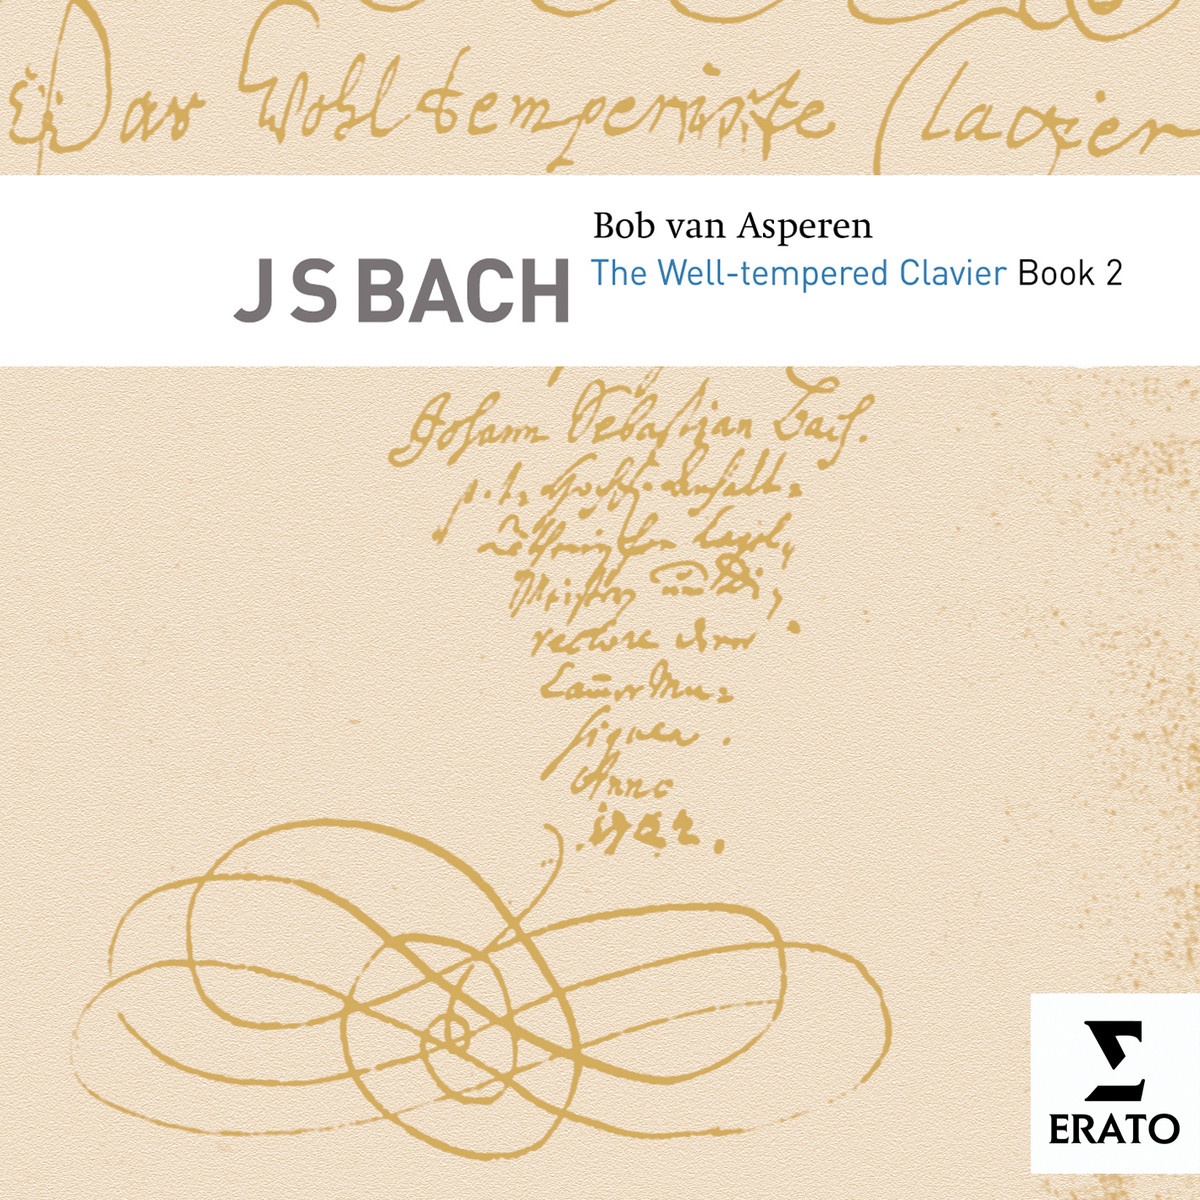 Das wohltemperierte Klavier Book Two BWV 870-893, Book Two, No. 6 in D minor BWV 875: Fugue